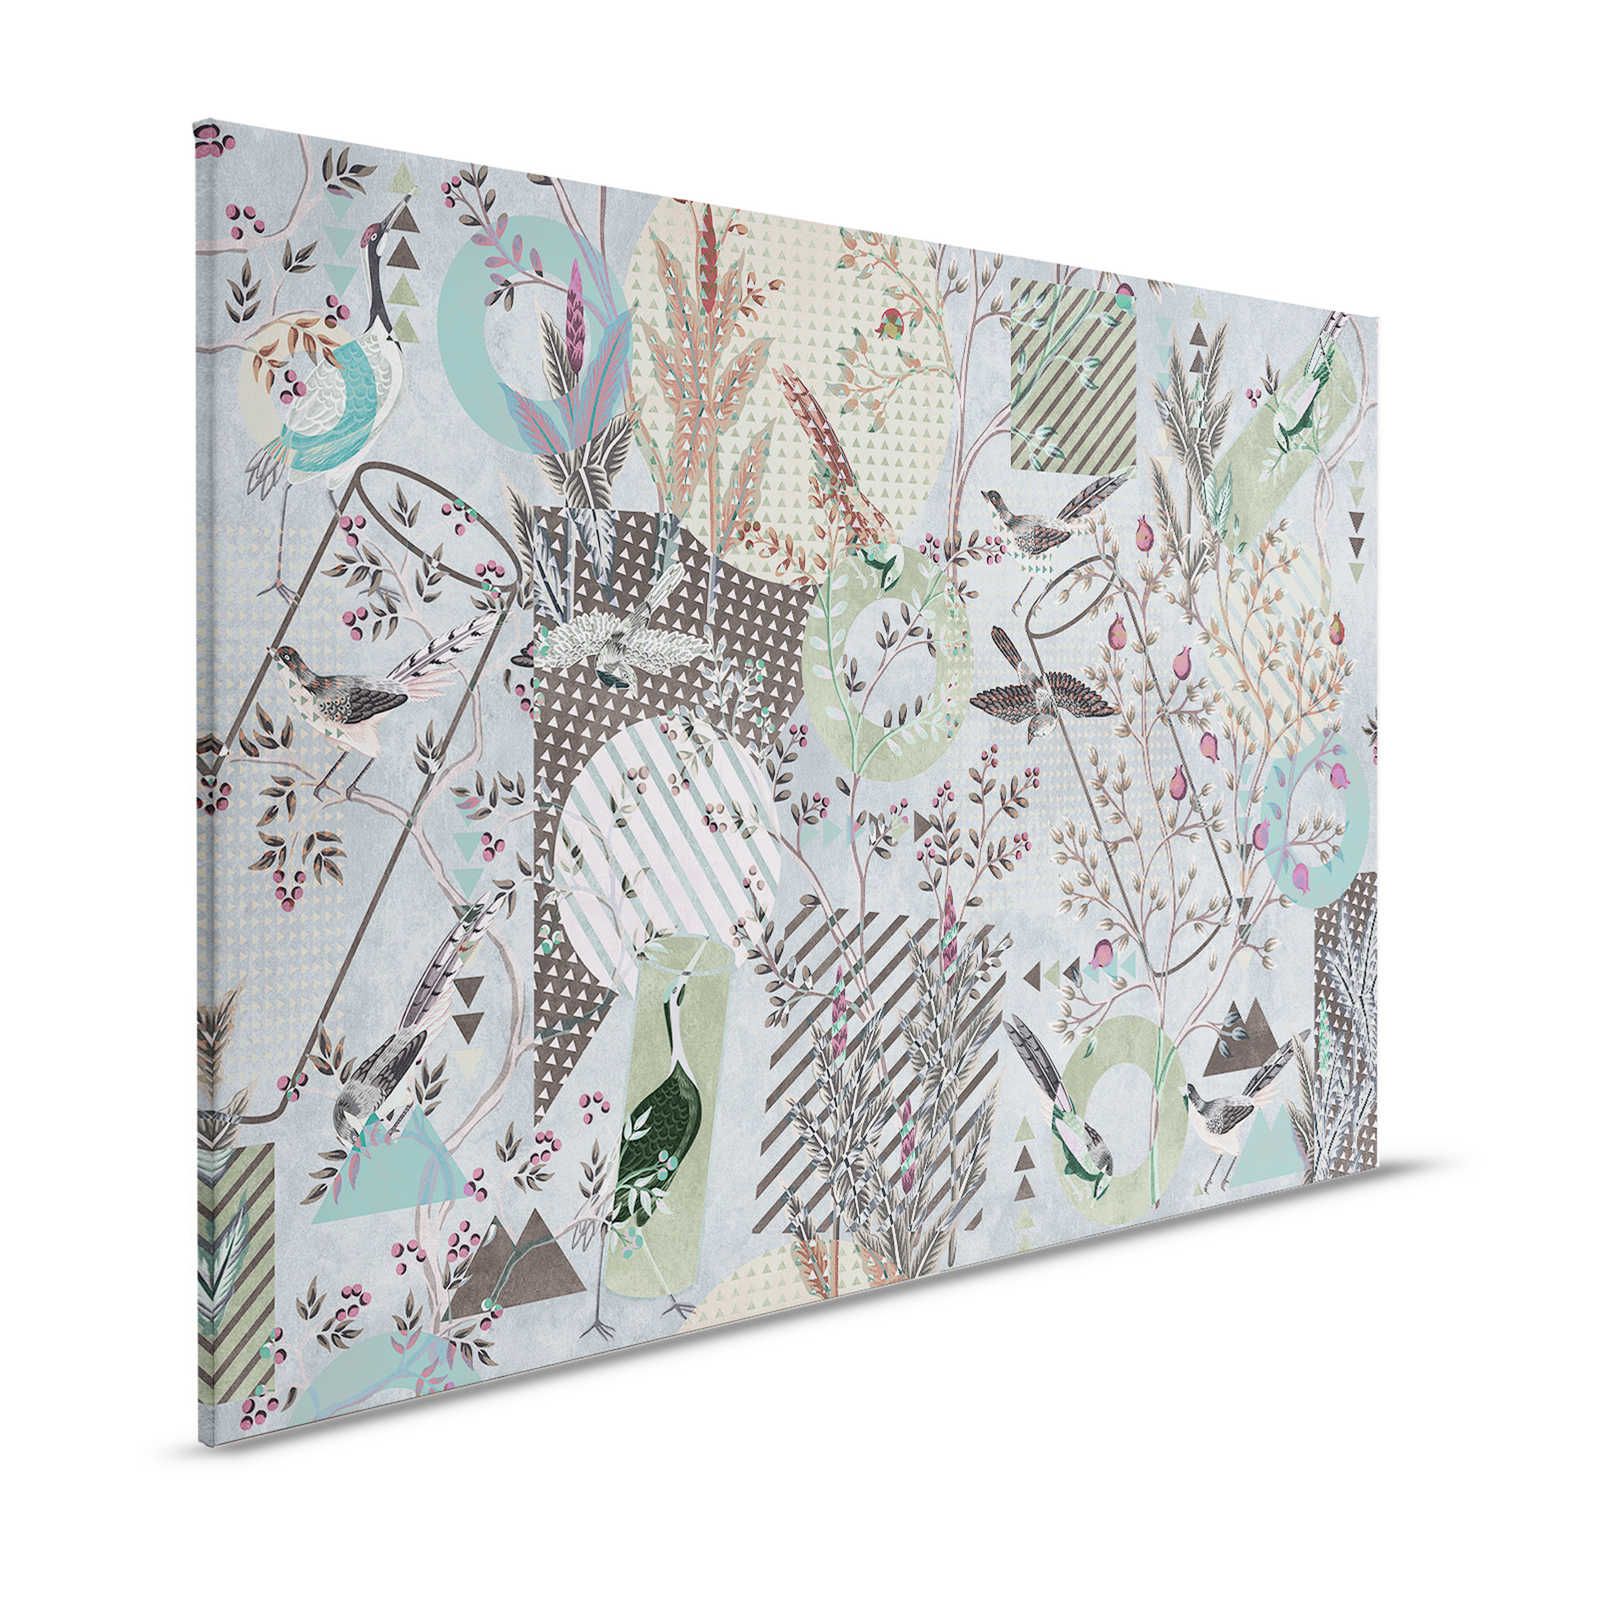 Birds Playground 2 - Birds Canvas painting Collage & Pattern Mix - 1.20 m x 0.80 m
